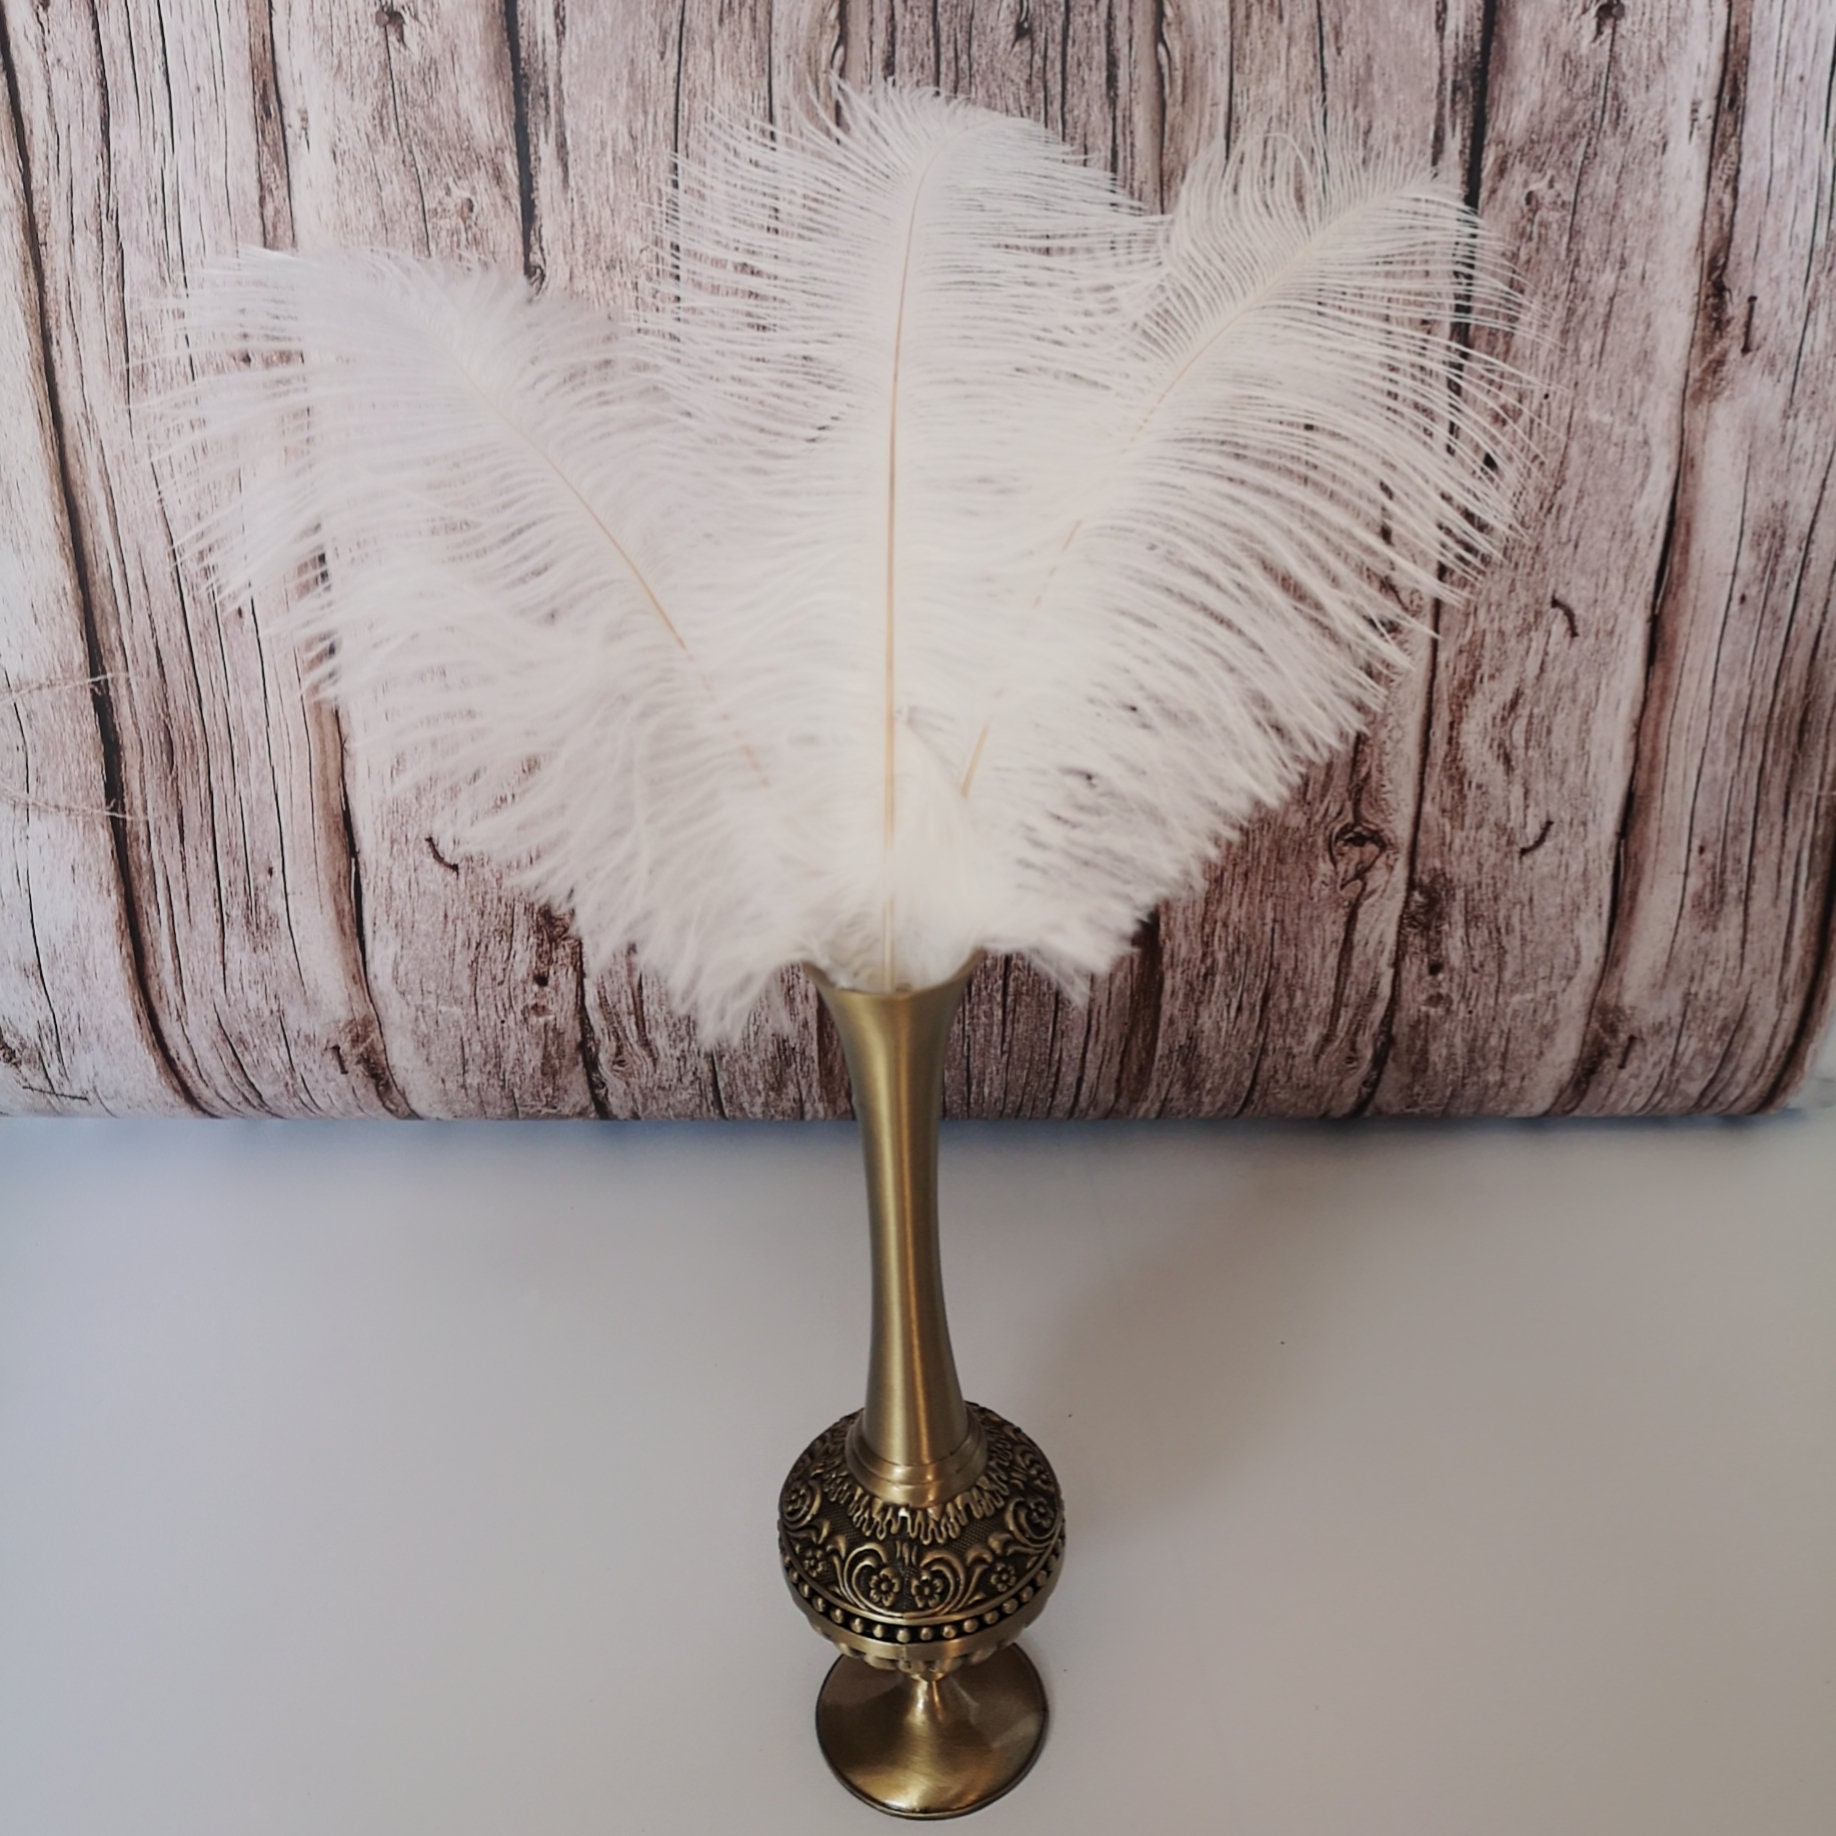 50pcs 10-15cm Natural Home Decor Ostrich Feathers for Home Wedding Xmas Party de